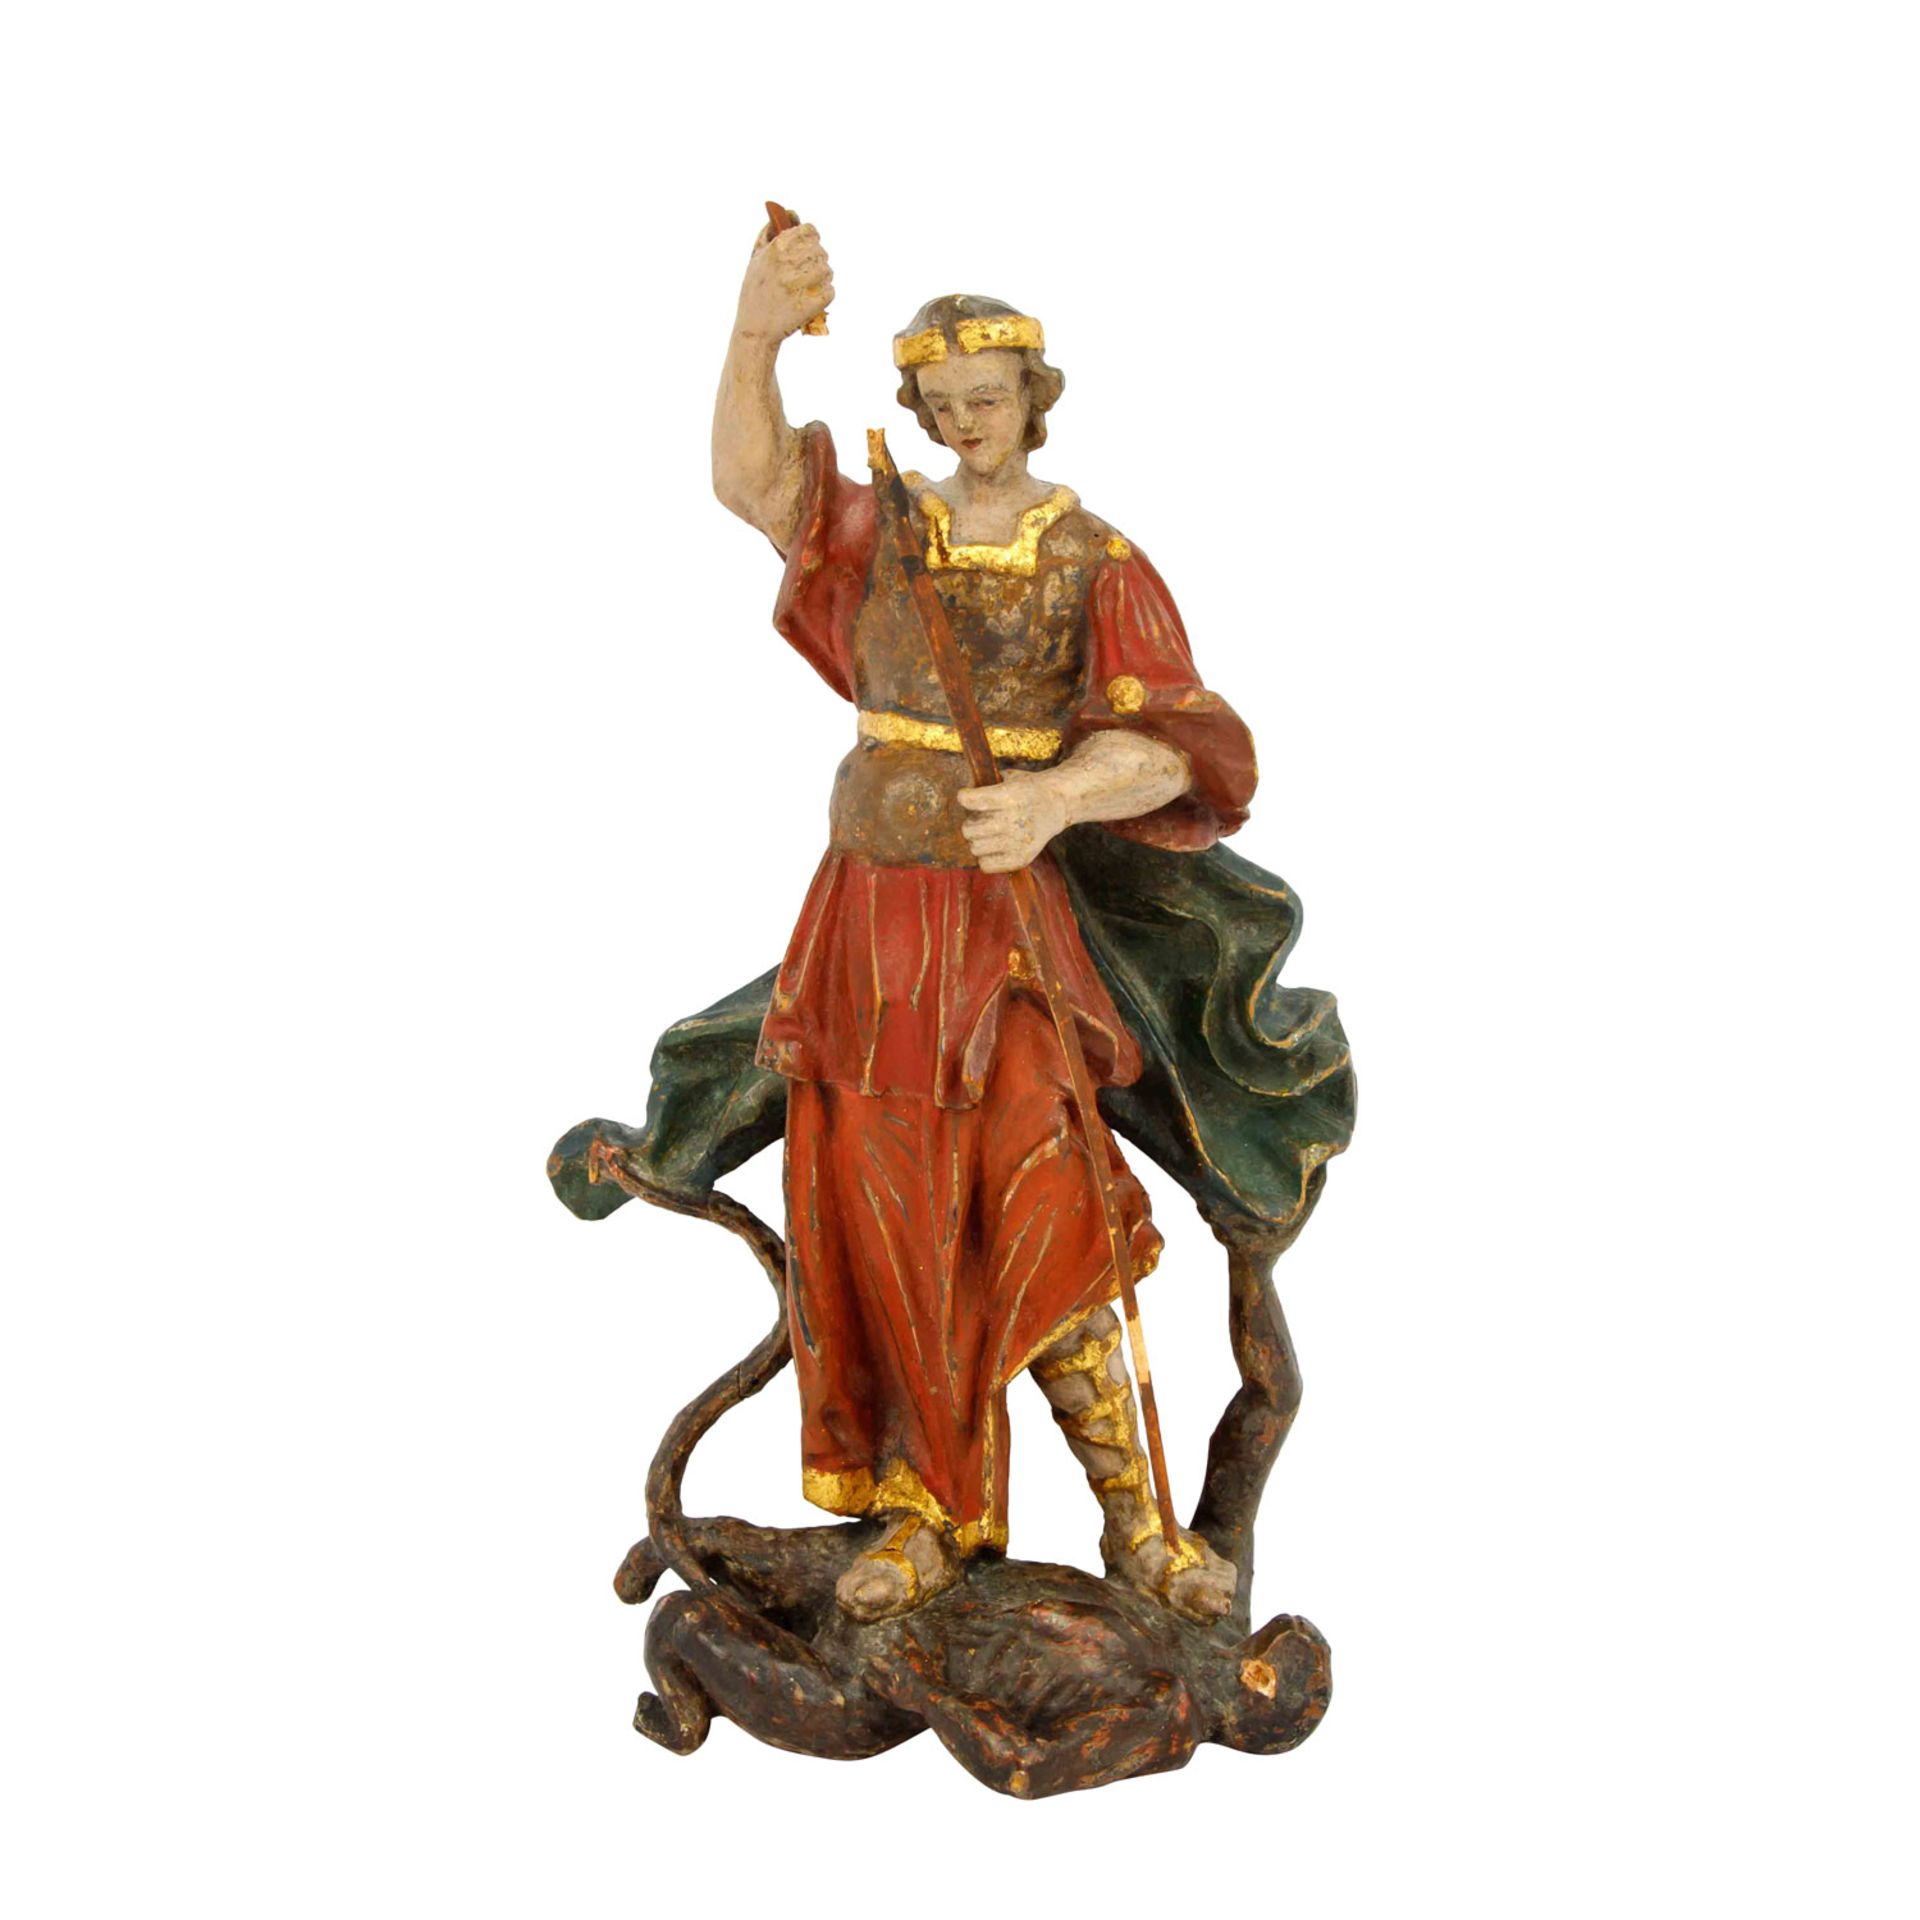 Mittelalterliche Figurengruppe "Erzengel Michael bezwingt Luzifer",